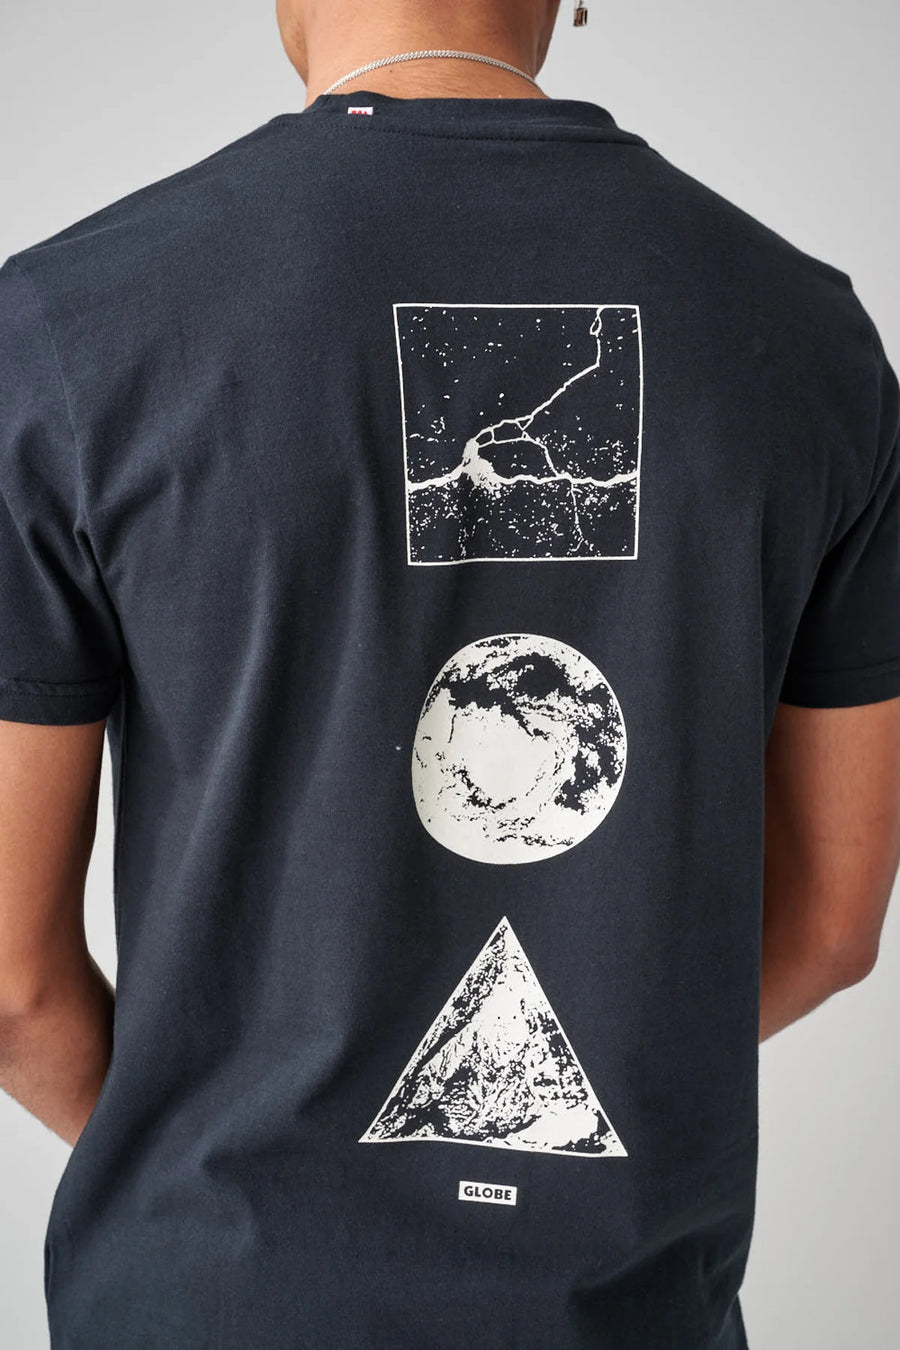 Globe Terrain 2 T-Shirt